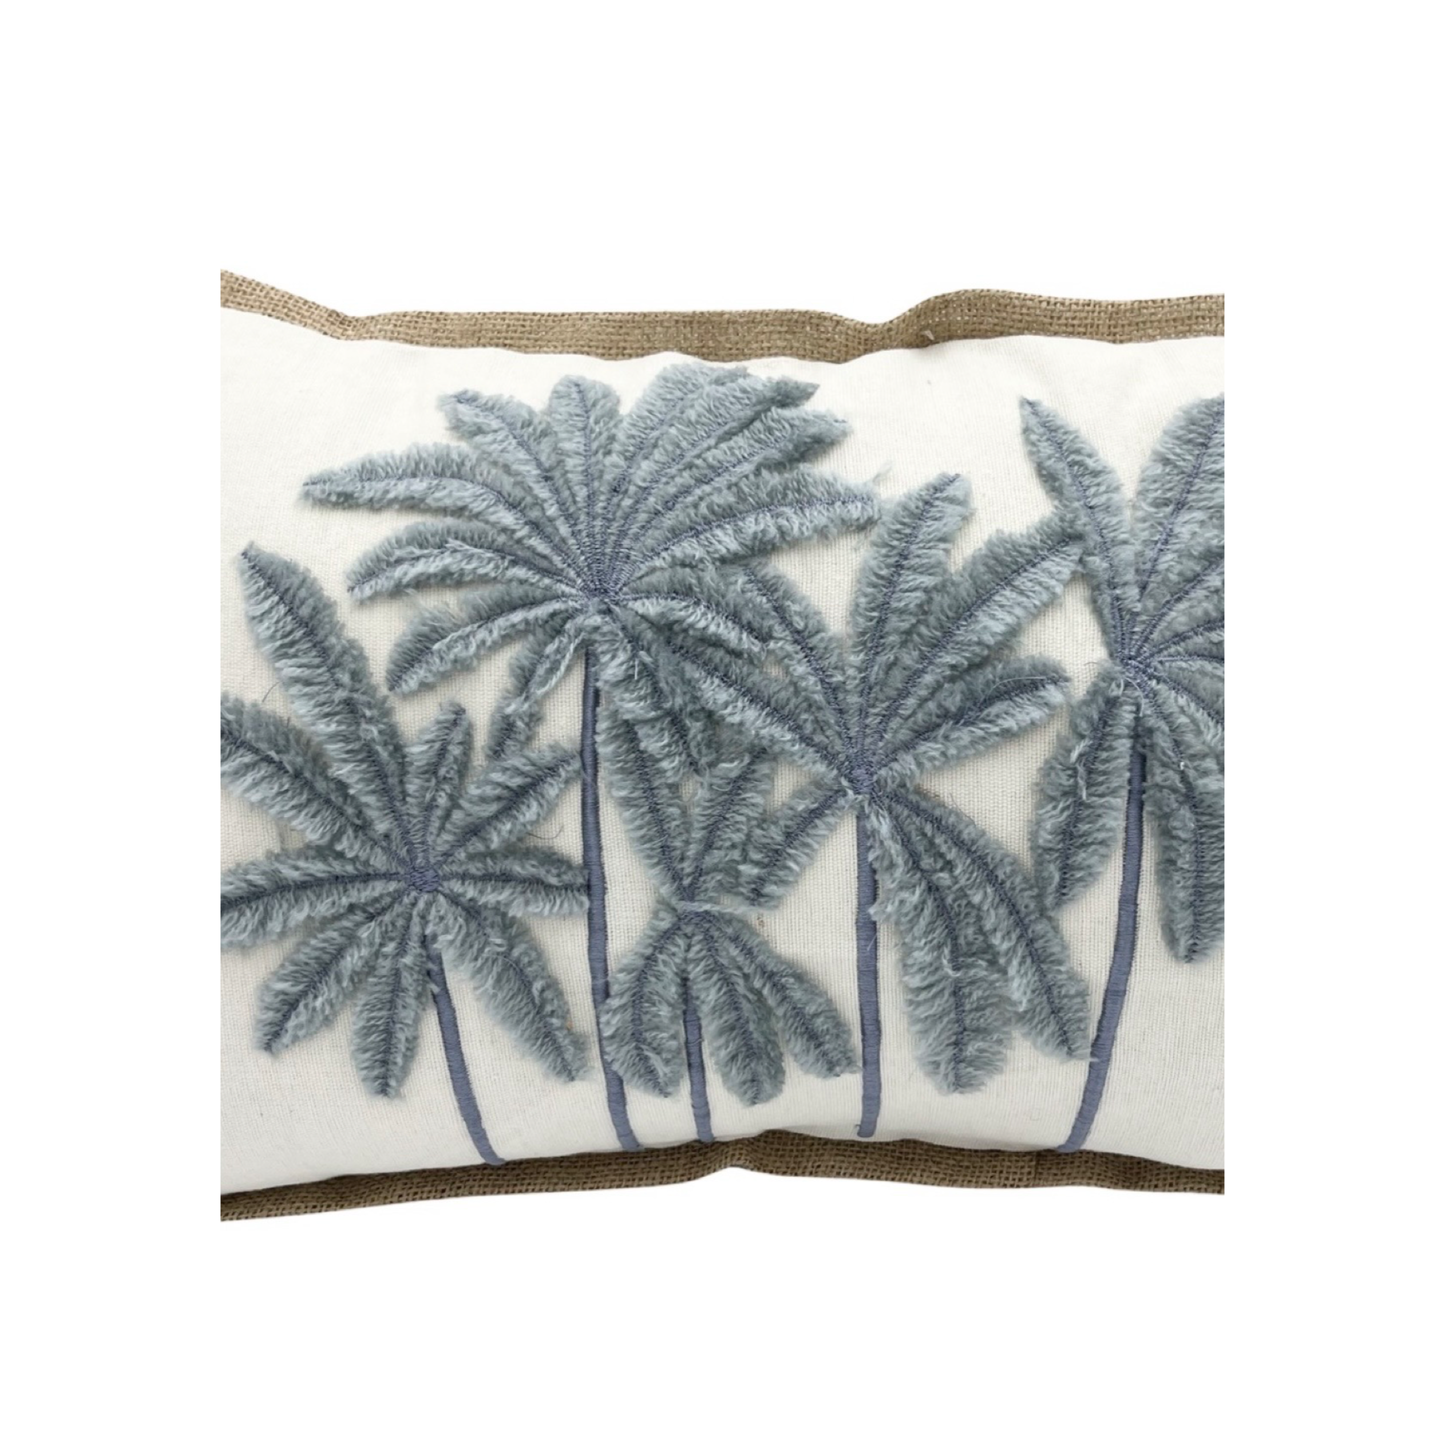 Holly Palm Cushion Cover / 50cm x 30cm